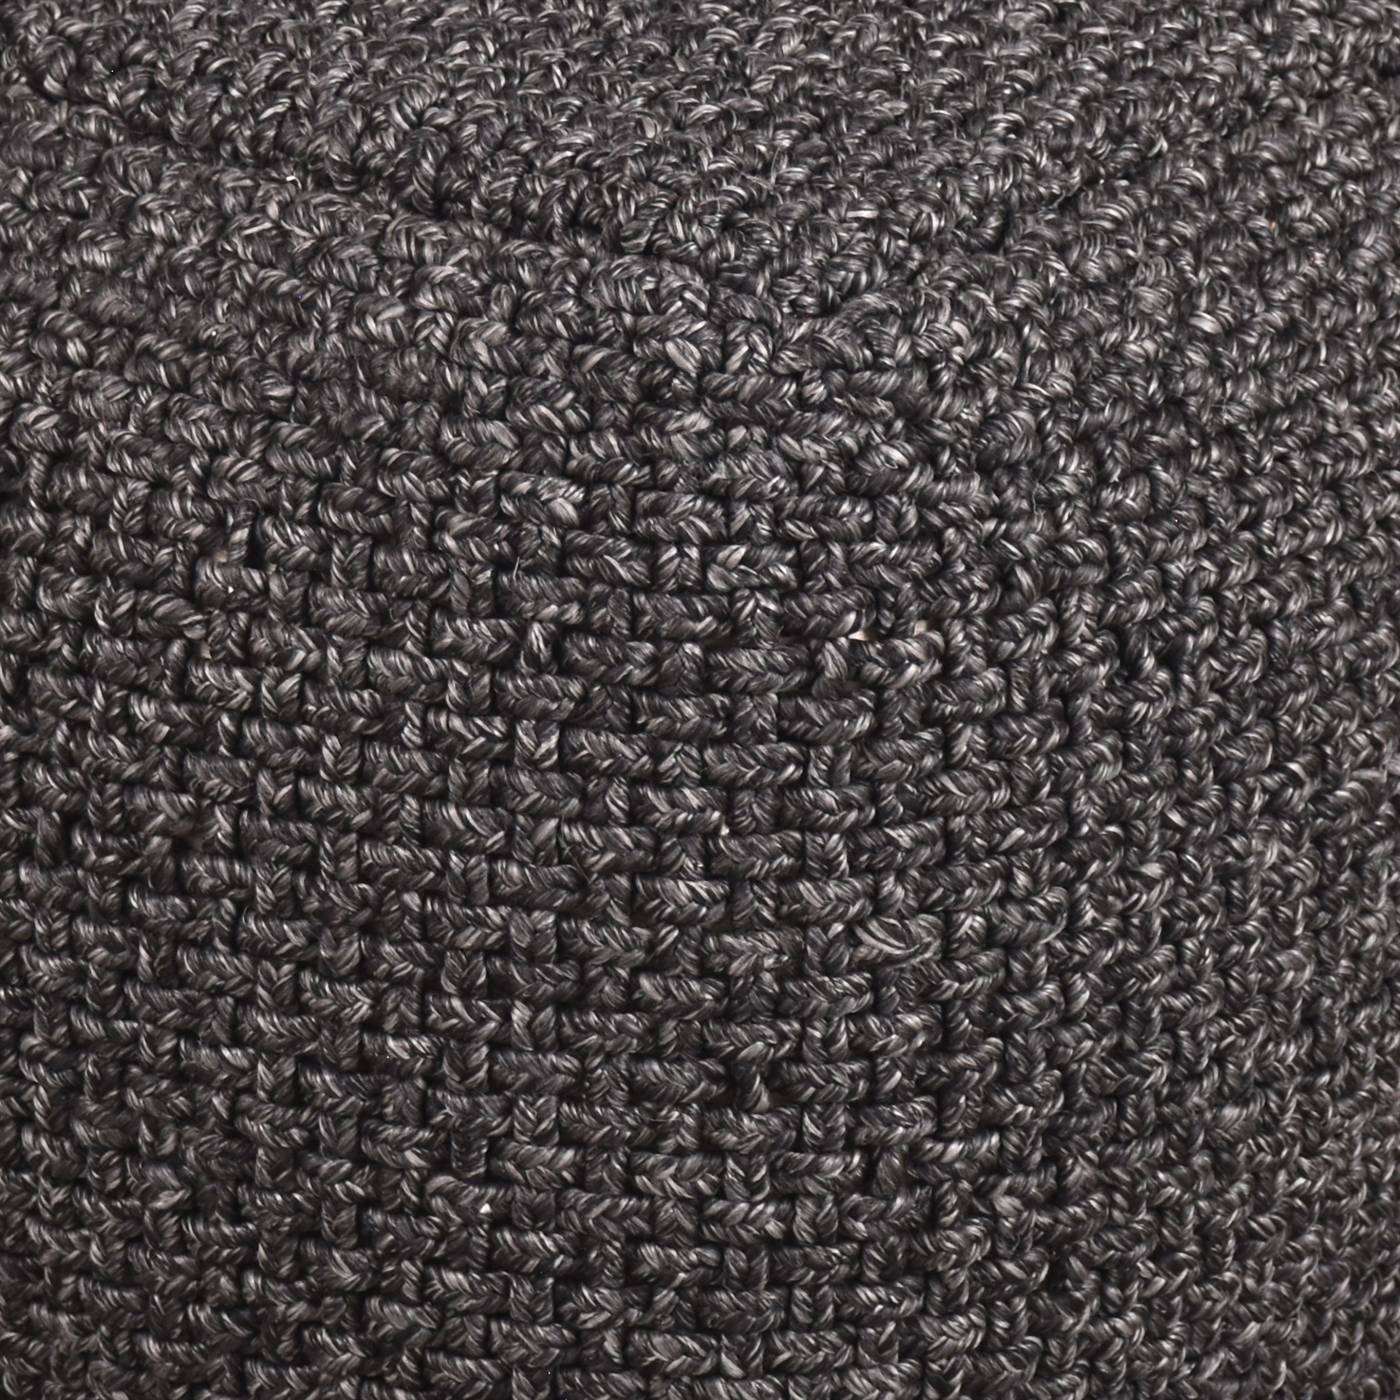 Moffat Pouf, 40x40x40 cm, Charcoal, Polypropylene, PET, Hand Made, Hm Stitching, Flat Weave